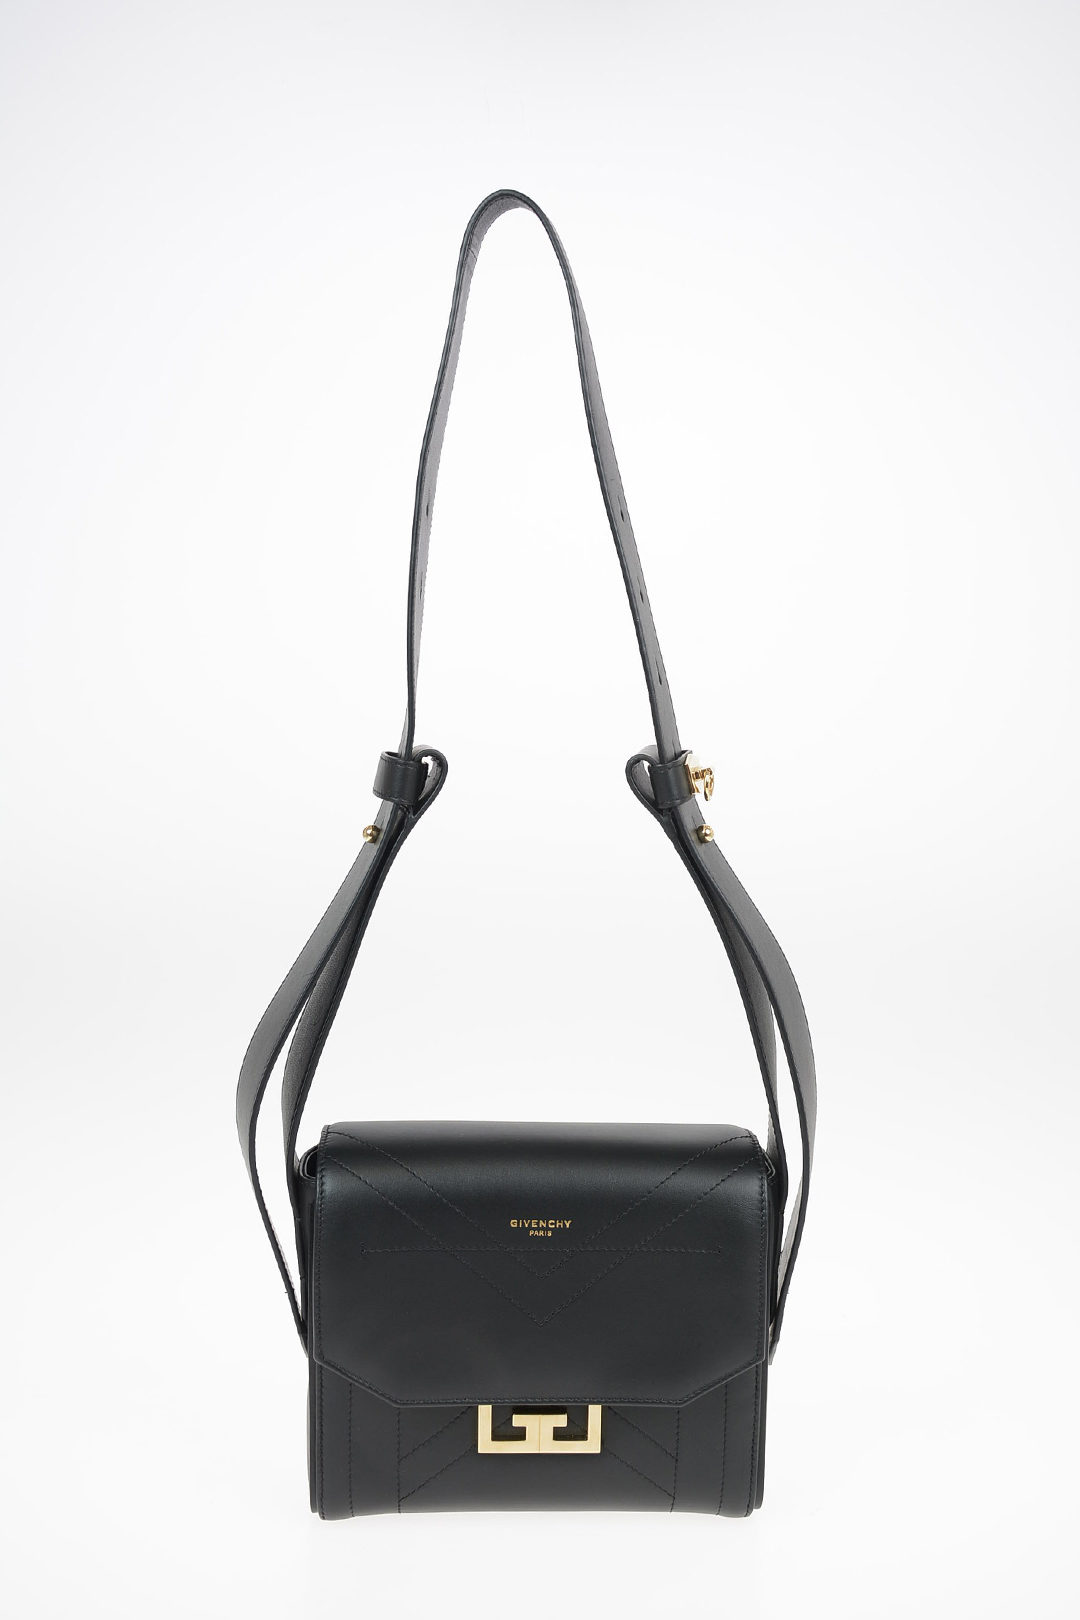 DKNY Eden Crossbody Bag, Sunflower: Handbags: Amazon.com